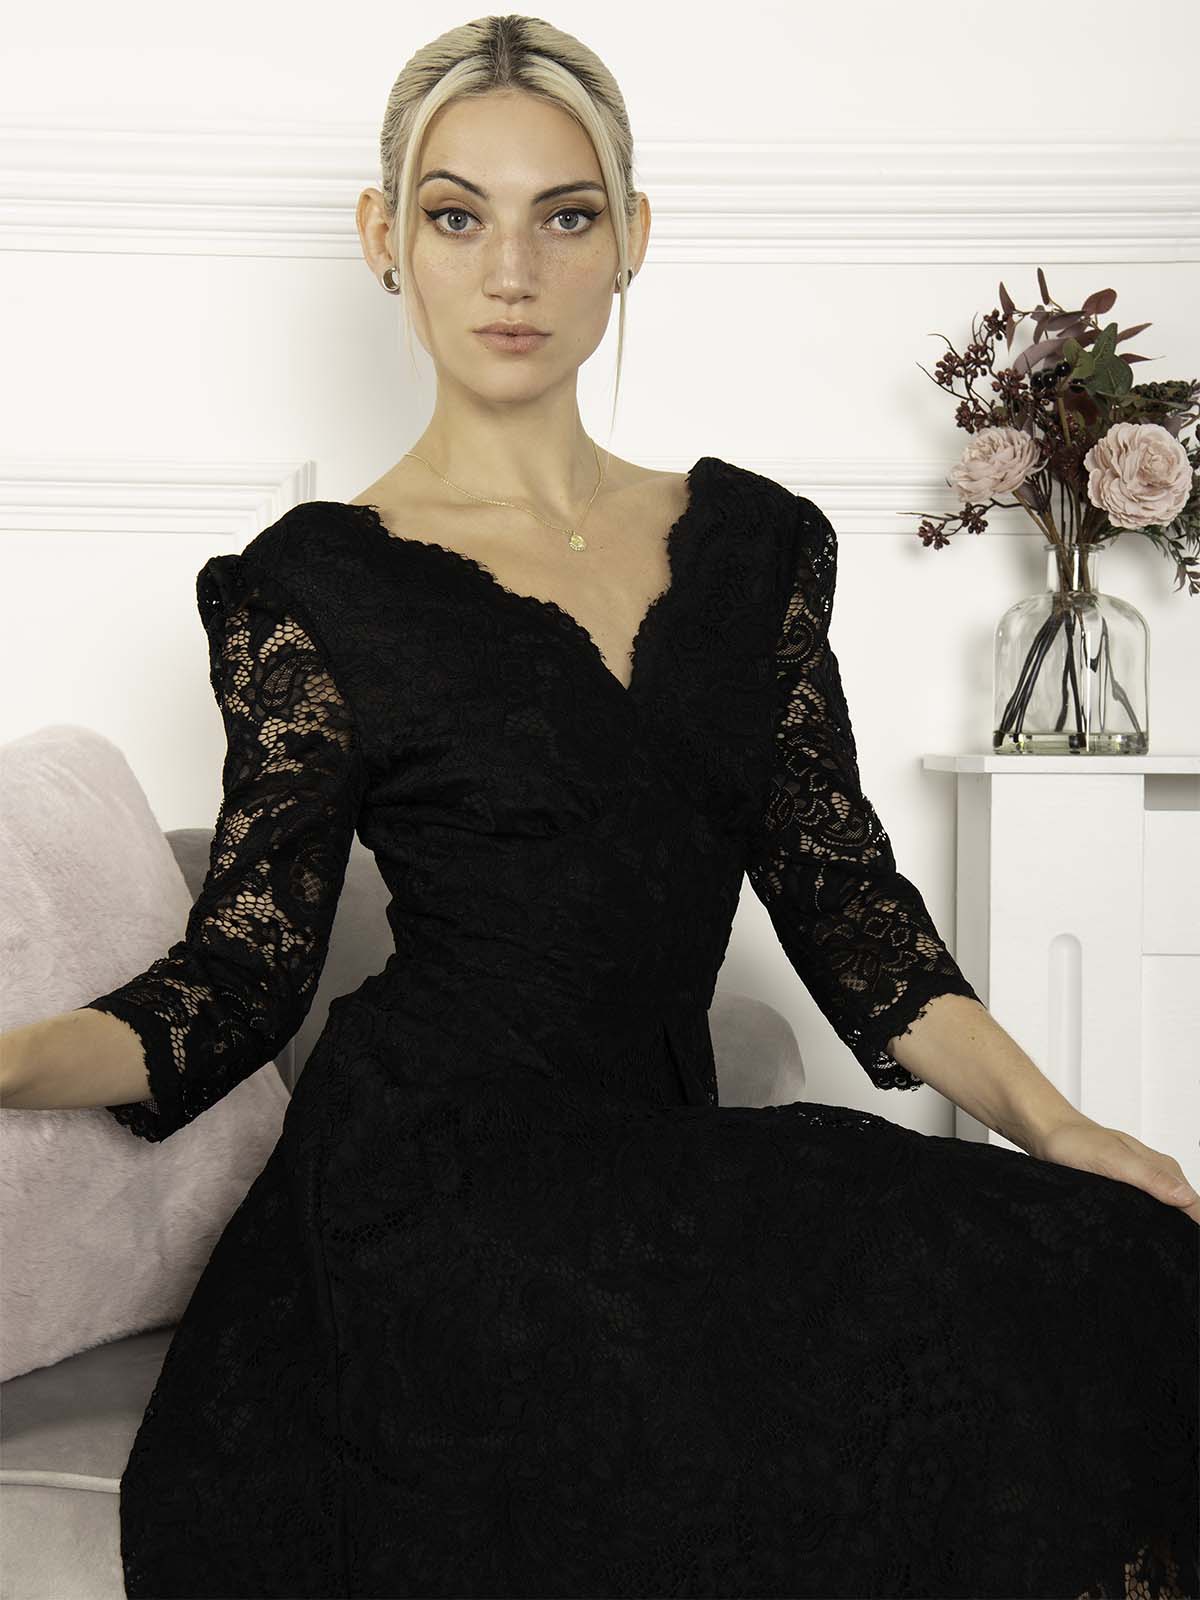 Black Wedding Dress, Black Lace Wedding Dress With Long Sleeves, Gothic  Wedding Dress, Alternative Wedding Dress Aurora 2.0 - Etsy